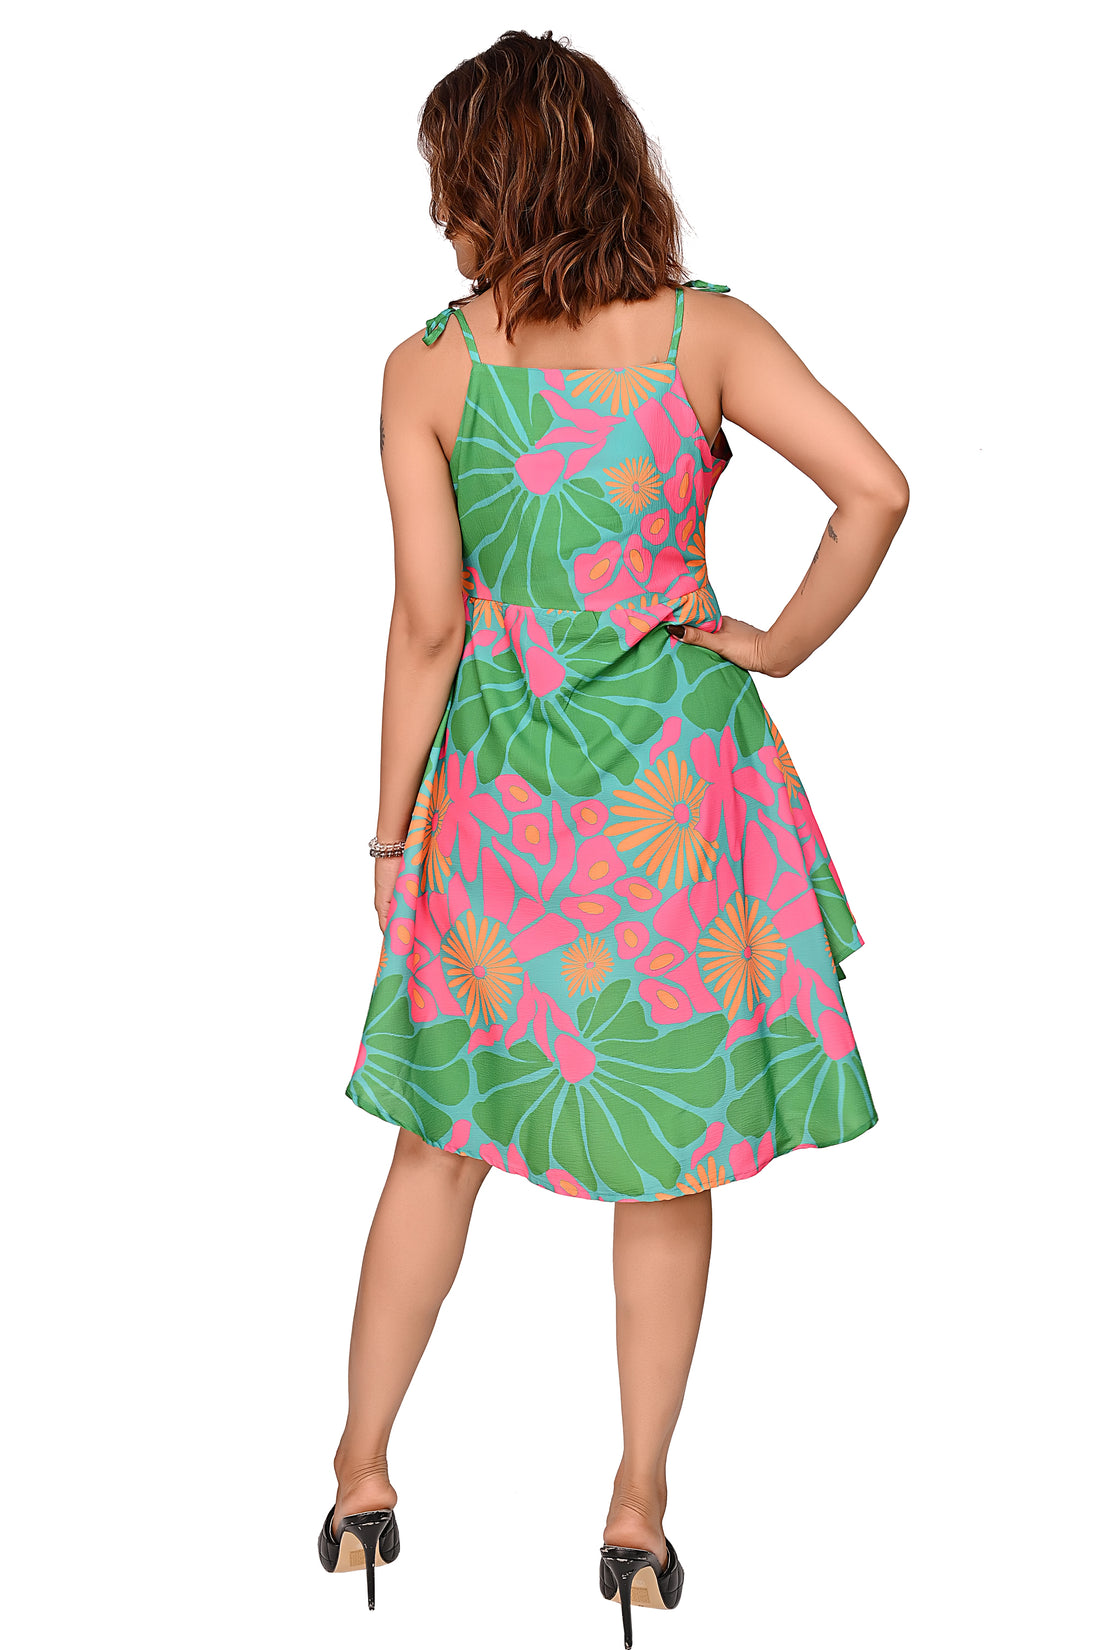 Nirmal online Premium Quality Tunic Dress  for Women in Digital Print